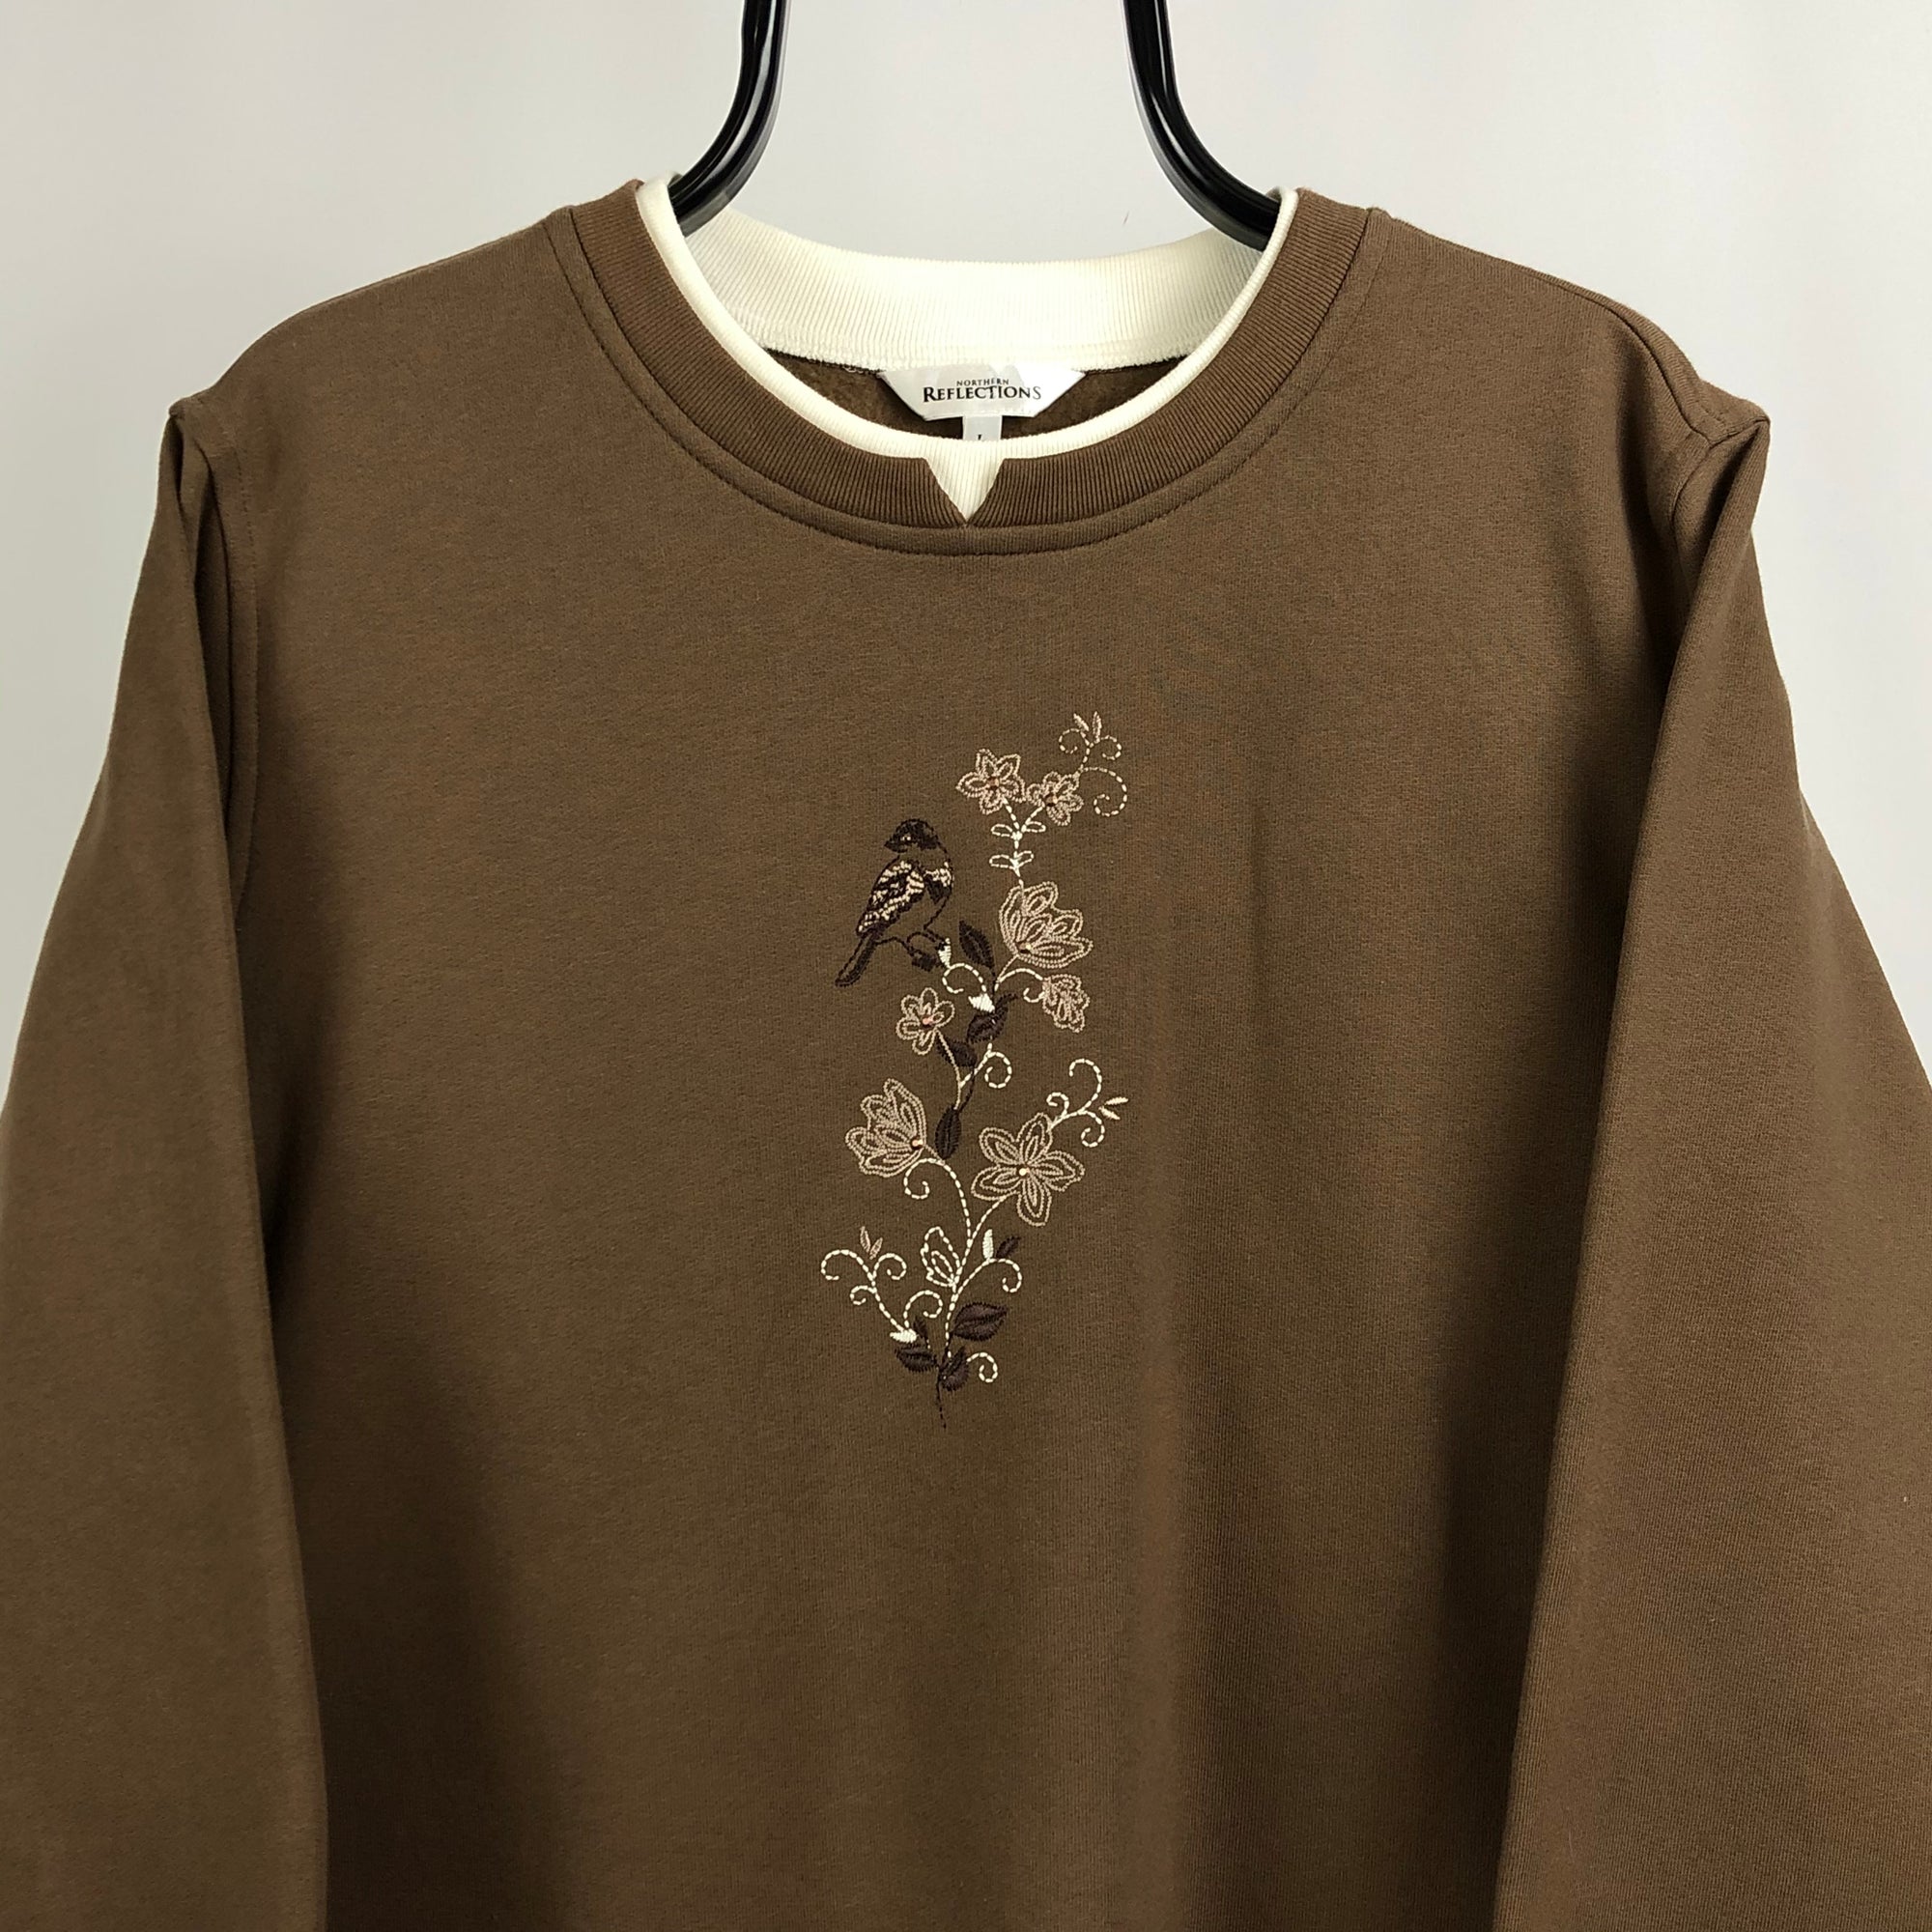 Vintage Bird Embroidery Sweatshirt in Brown - Men's Medium/Women's Large